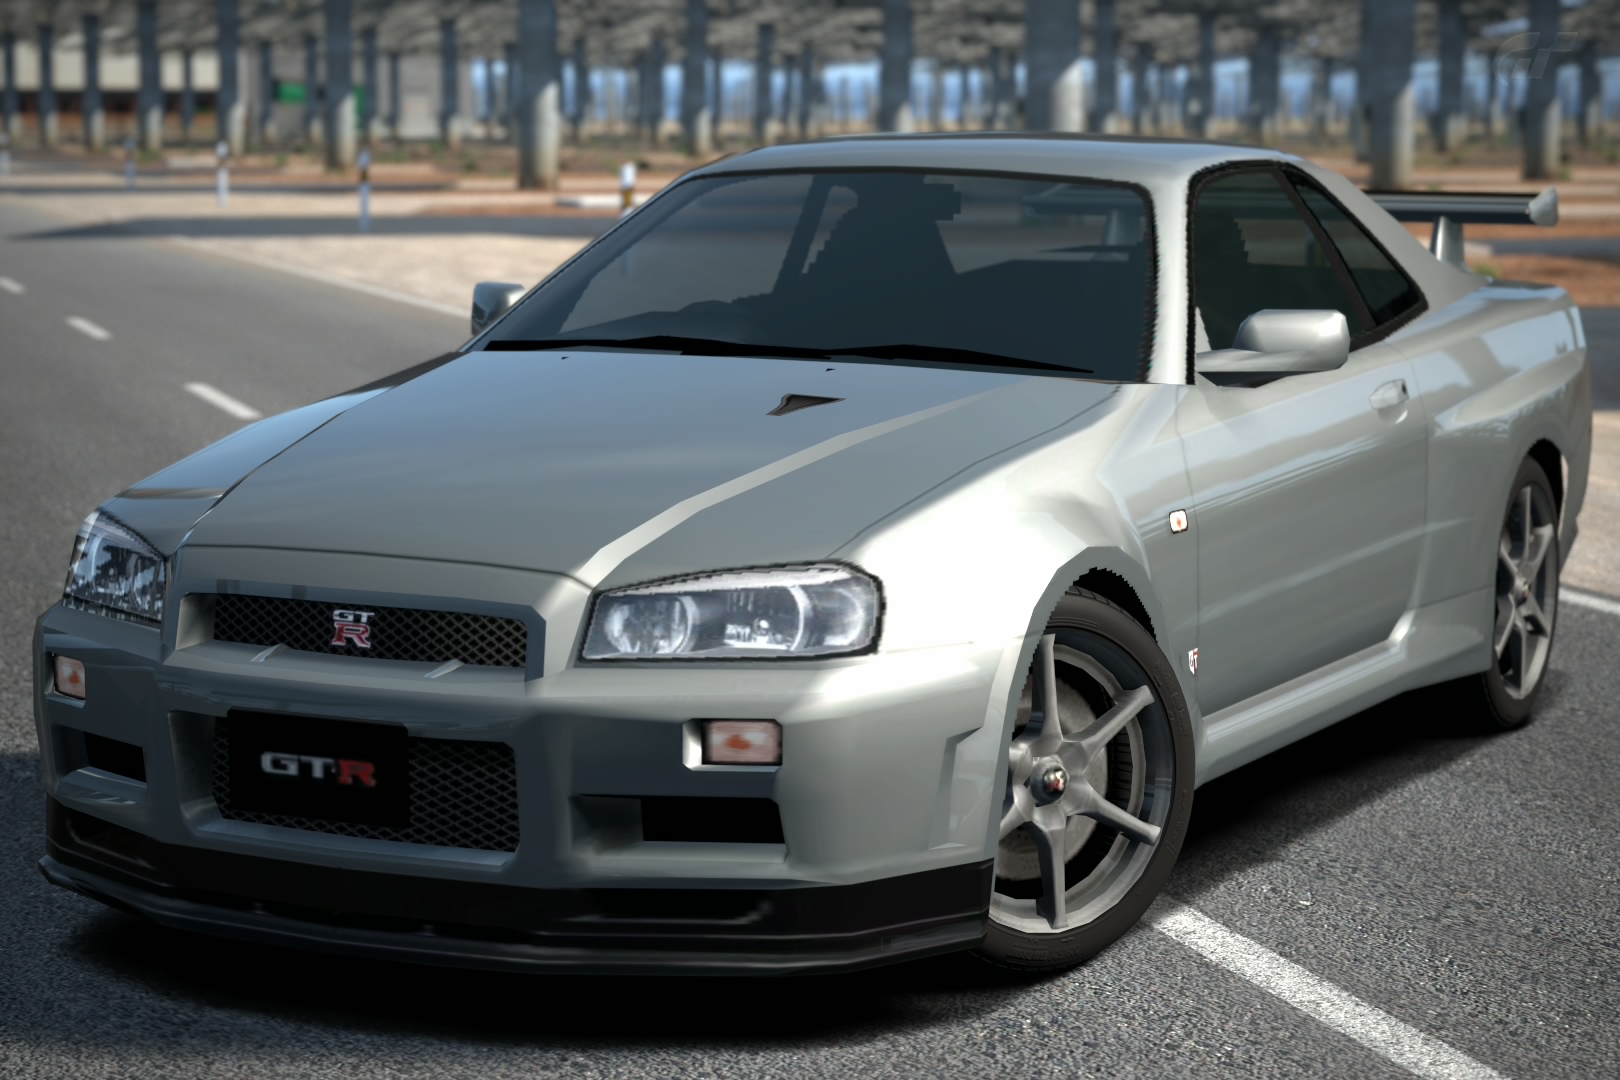 Nissan Skyline GT-R V-Spec (R34), Need for Speed Wiki